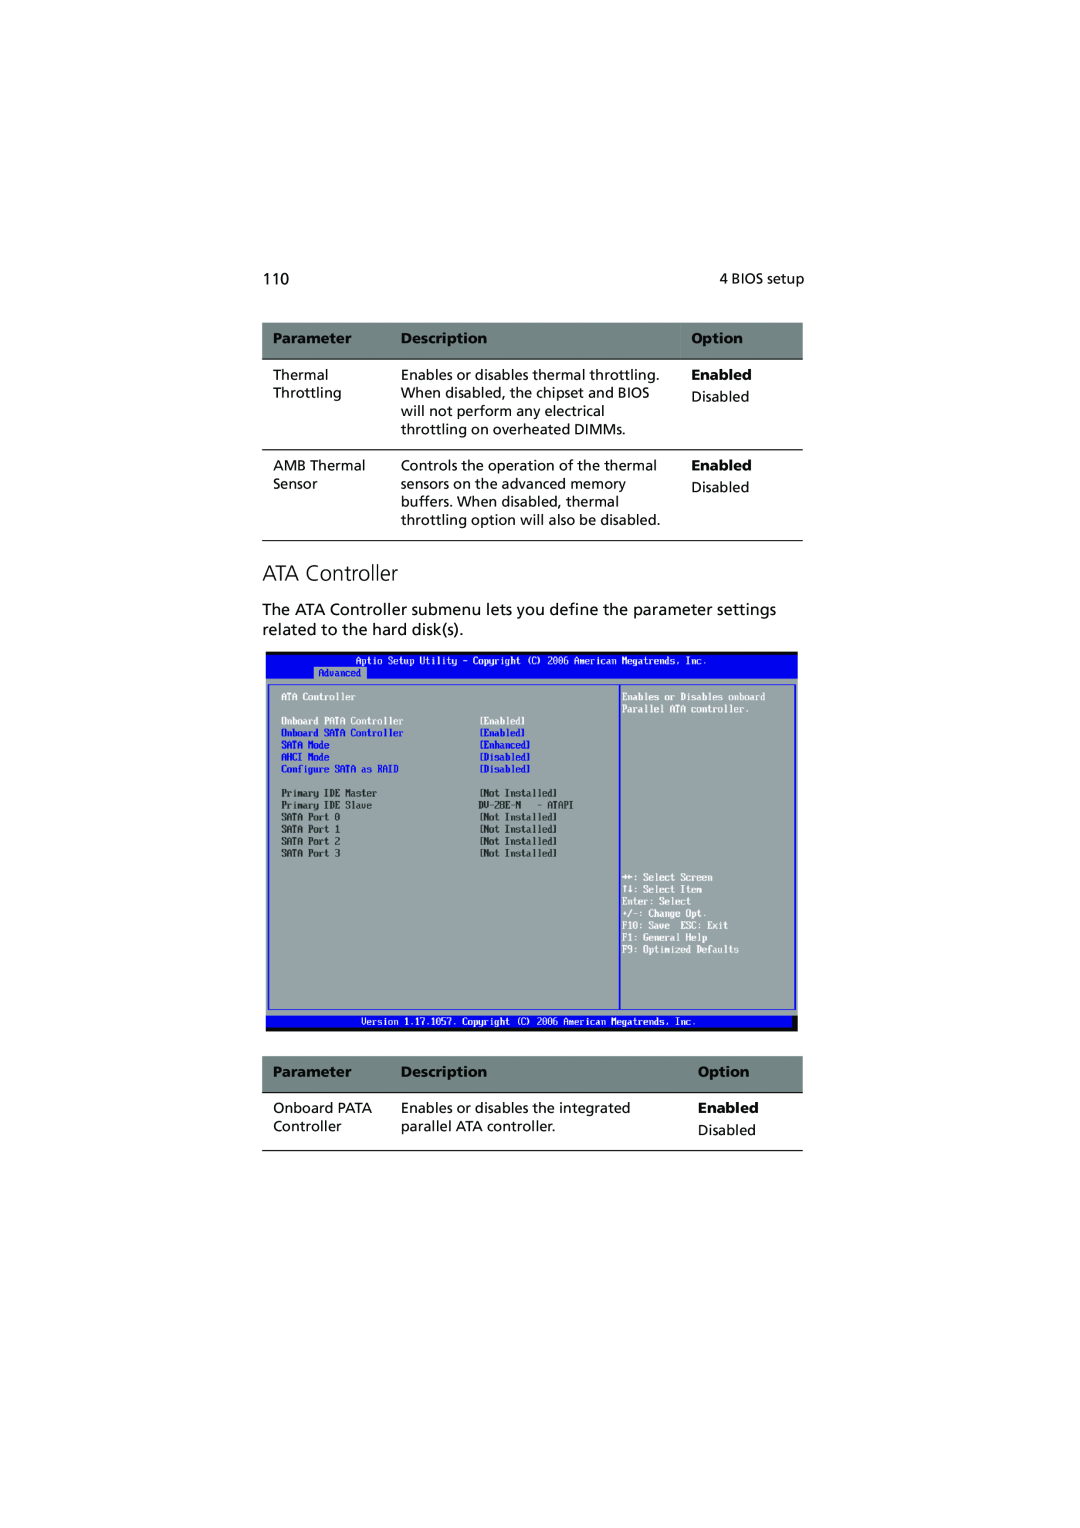 Acer R720 Series manual ATA Controller, Parameter, Description, Option, Enabled 